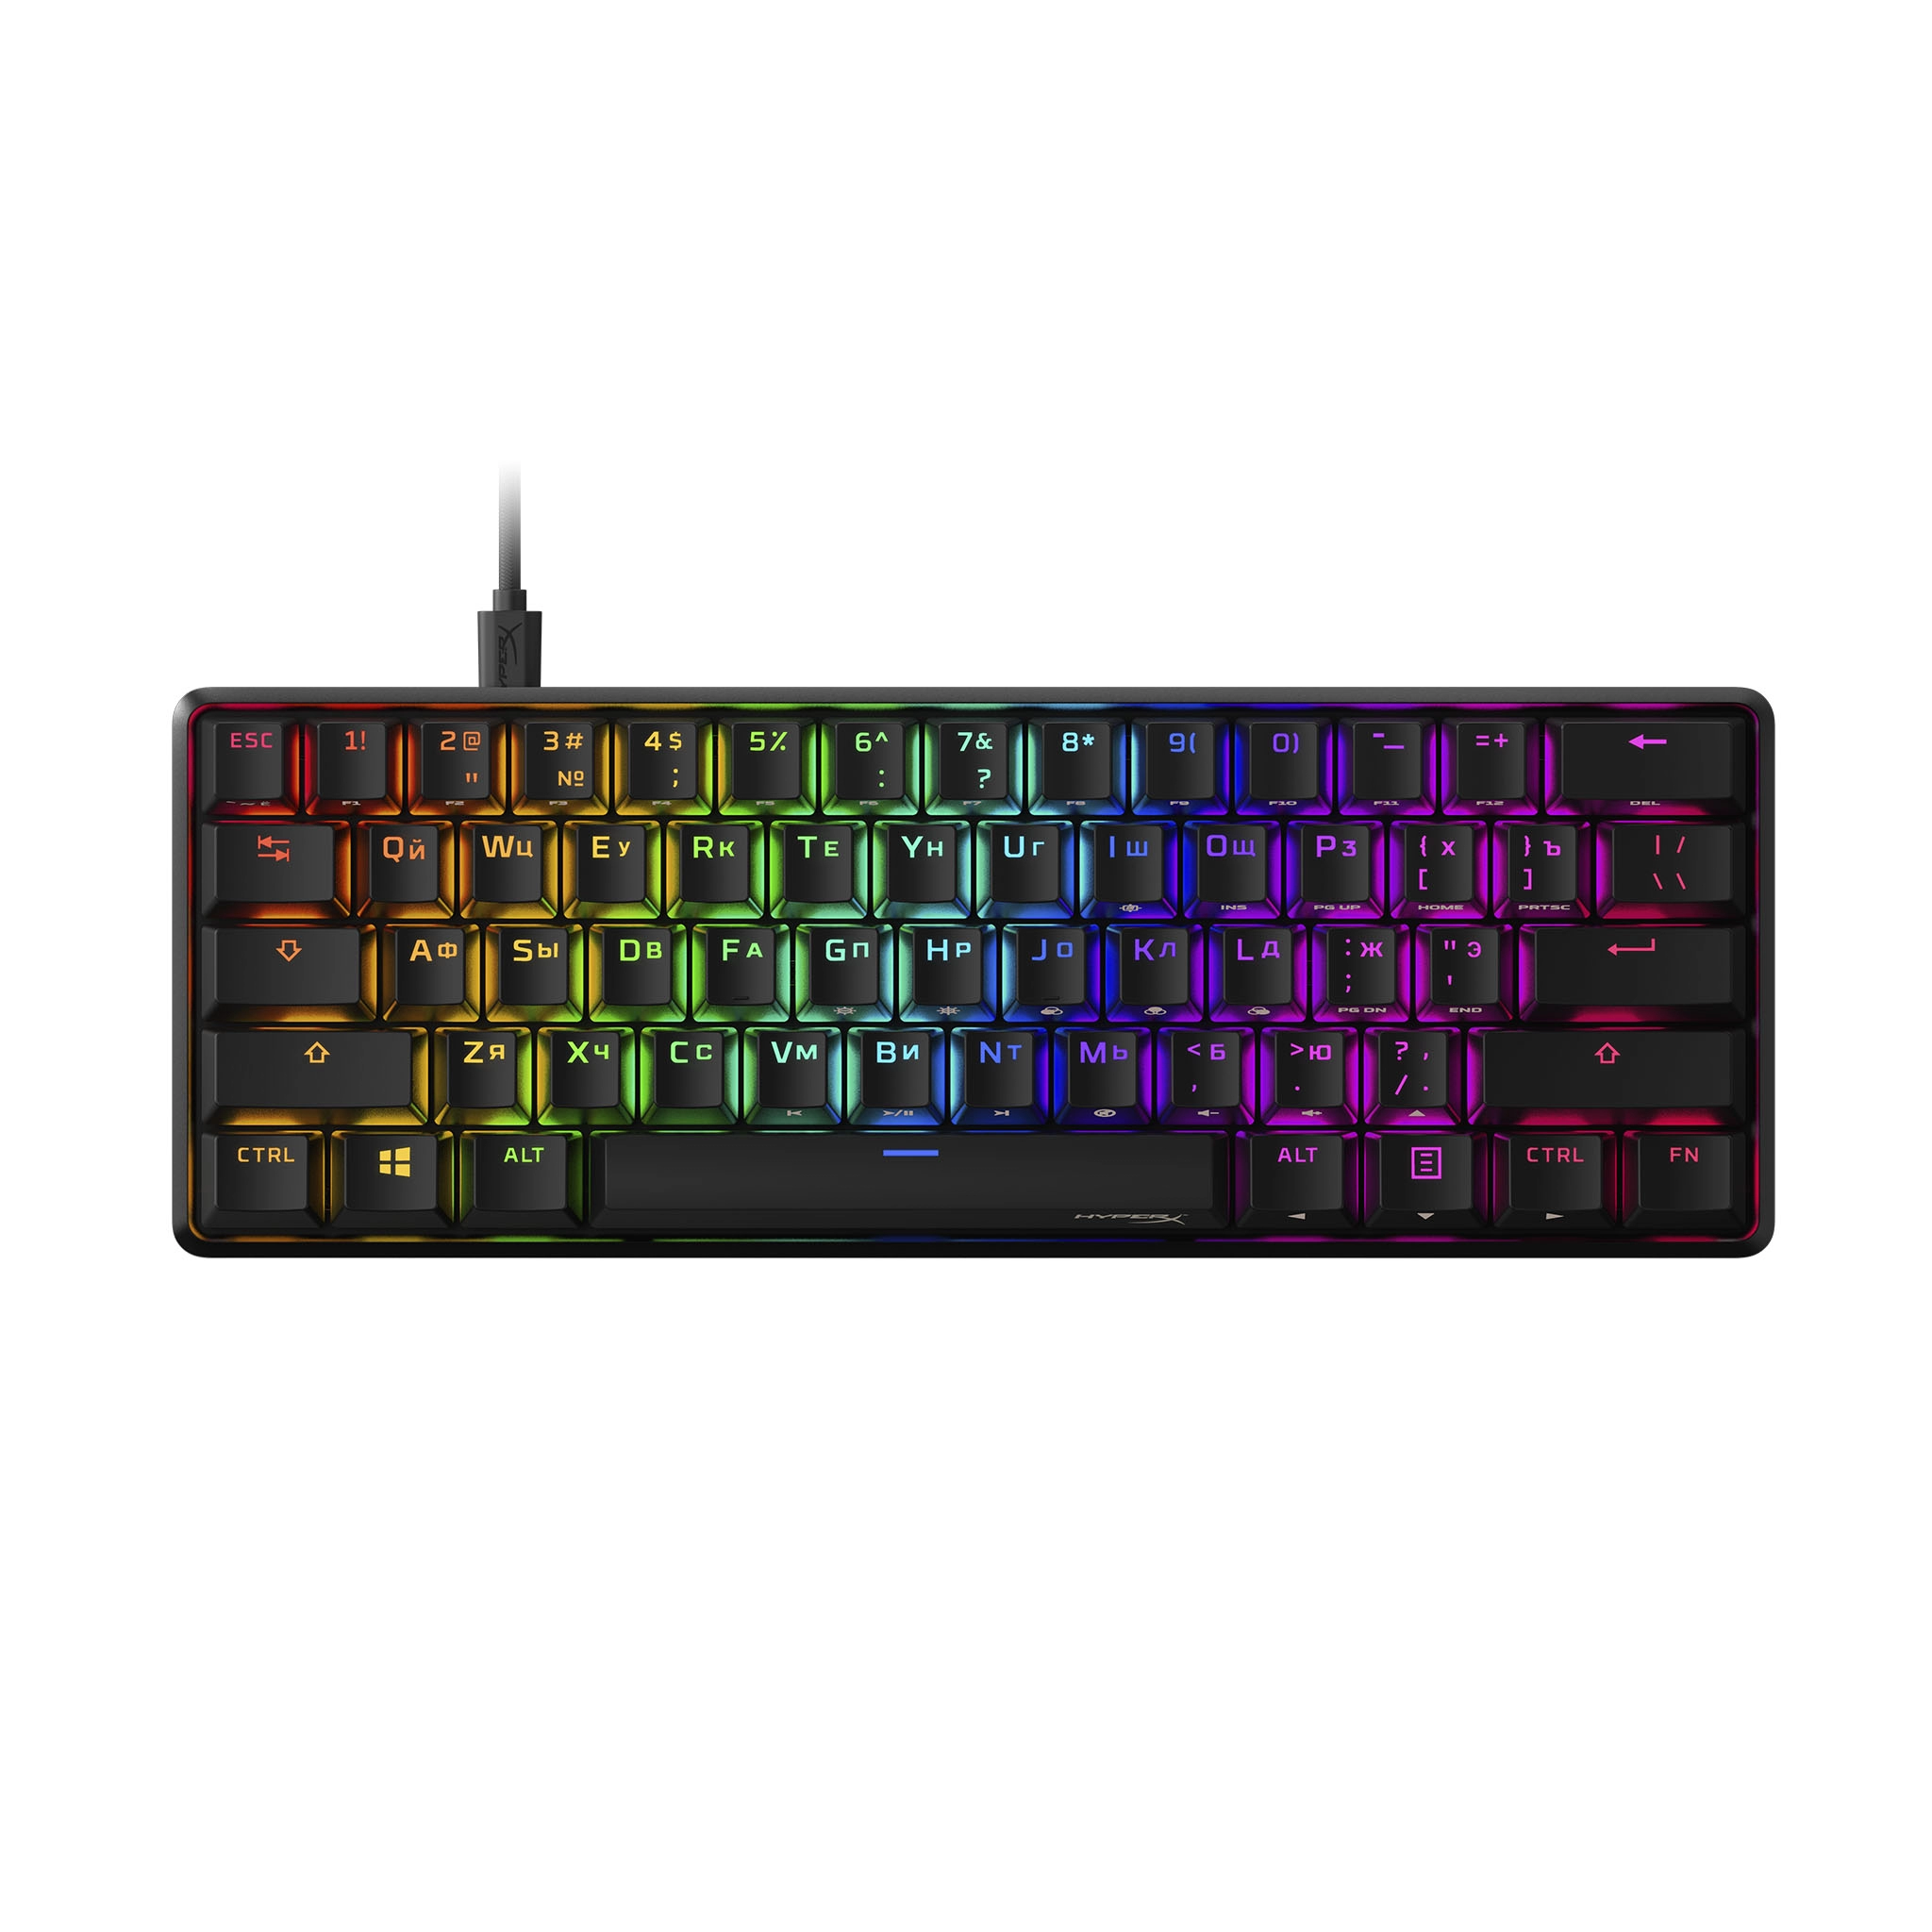 HYPERX Alloy Origins 60 RGB Mechanical Gaming Keyboard (RU), Black, Mechanical keys (HyperX Red key switch) Backlight (RGB), Petite 60% form factor, Ultra-portable design, Full aircraft-grade aluminum body, USB